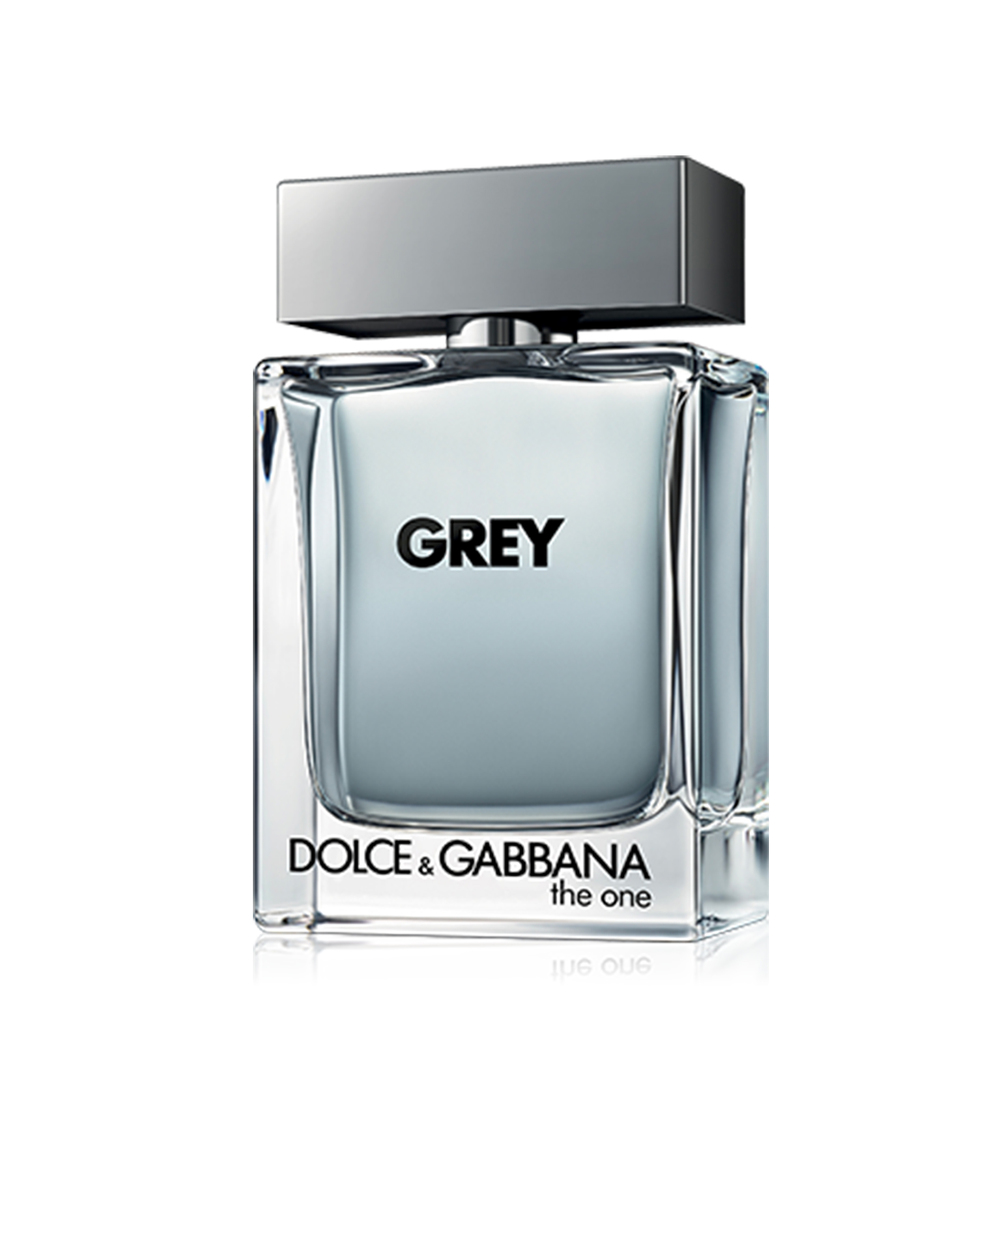 Туалетная вода The One Grey, 50 мл Dolce&Gabbana 85637500000ГРЕЙЗЕВАНФОМЕН — Kameron